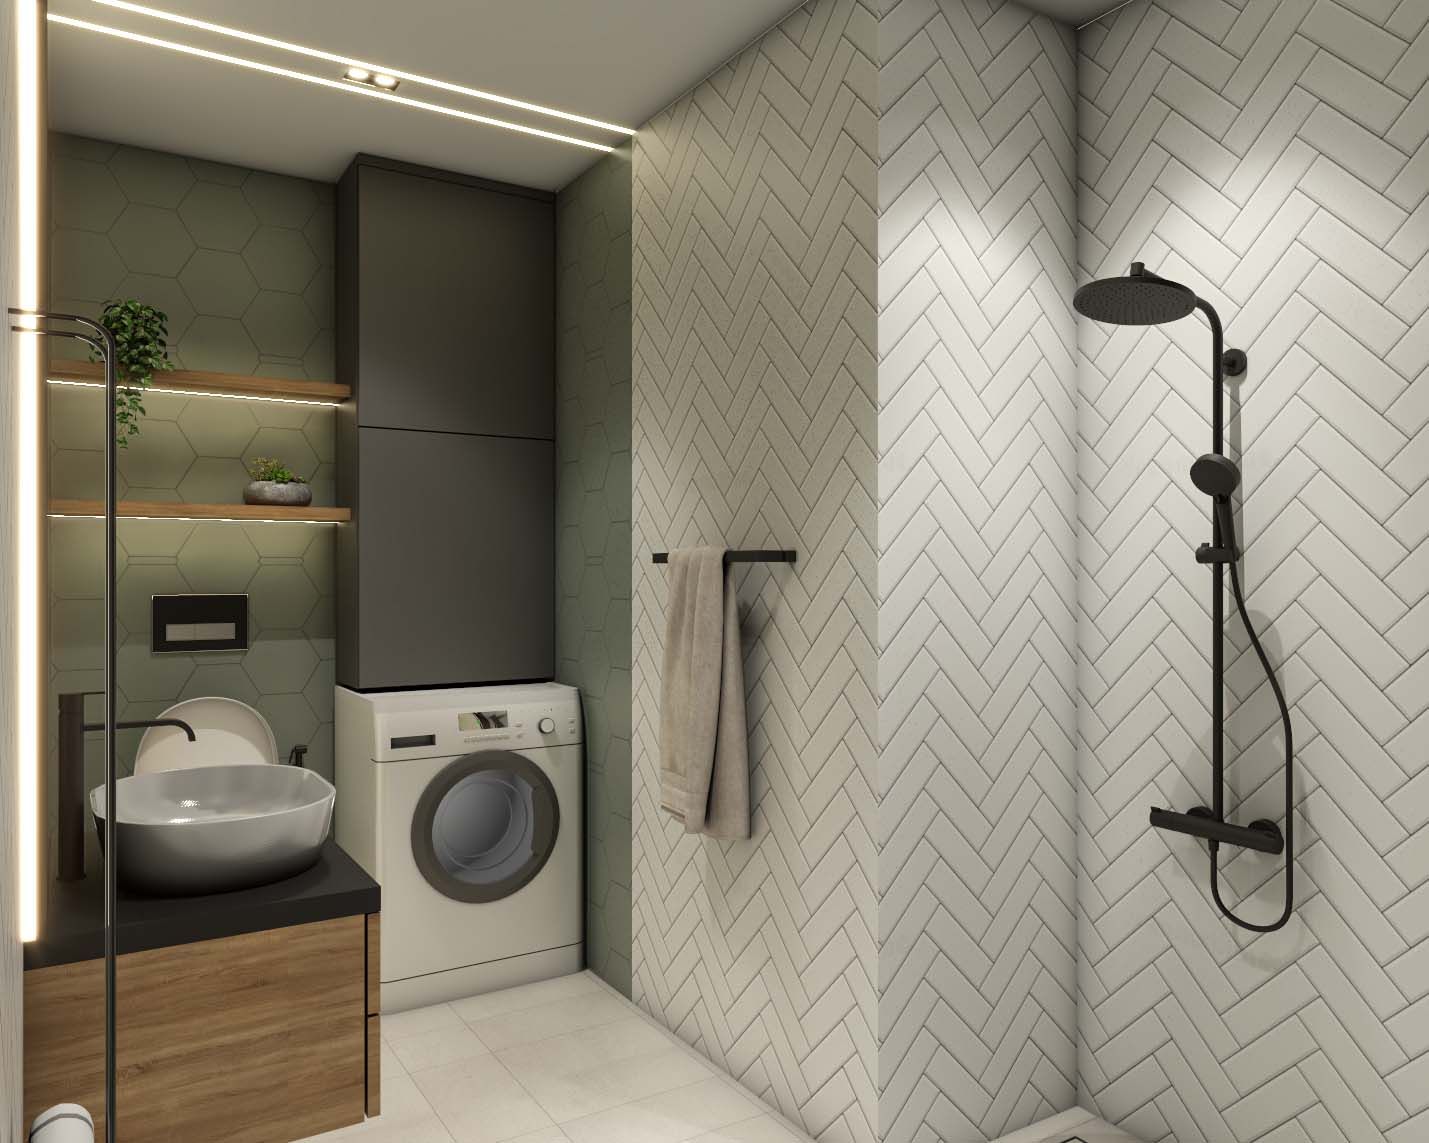 White Bathroom Tile Design With Rustic Wooden Details | Livspace